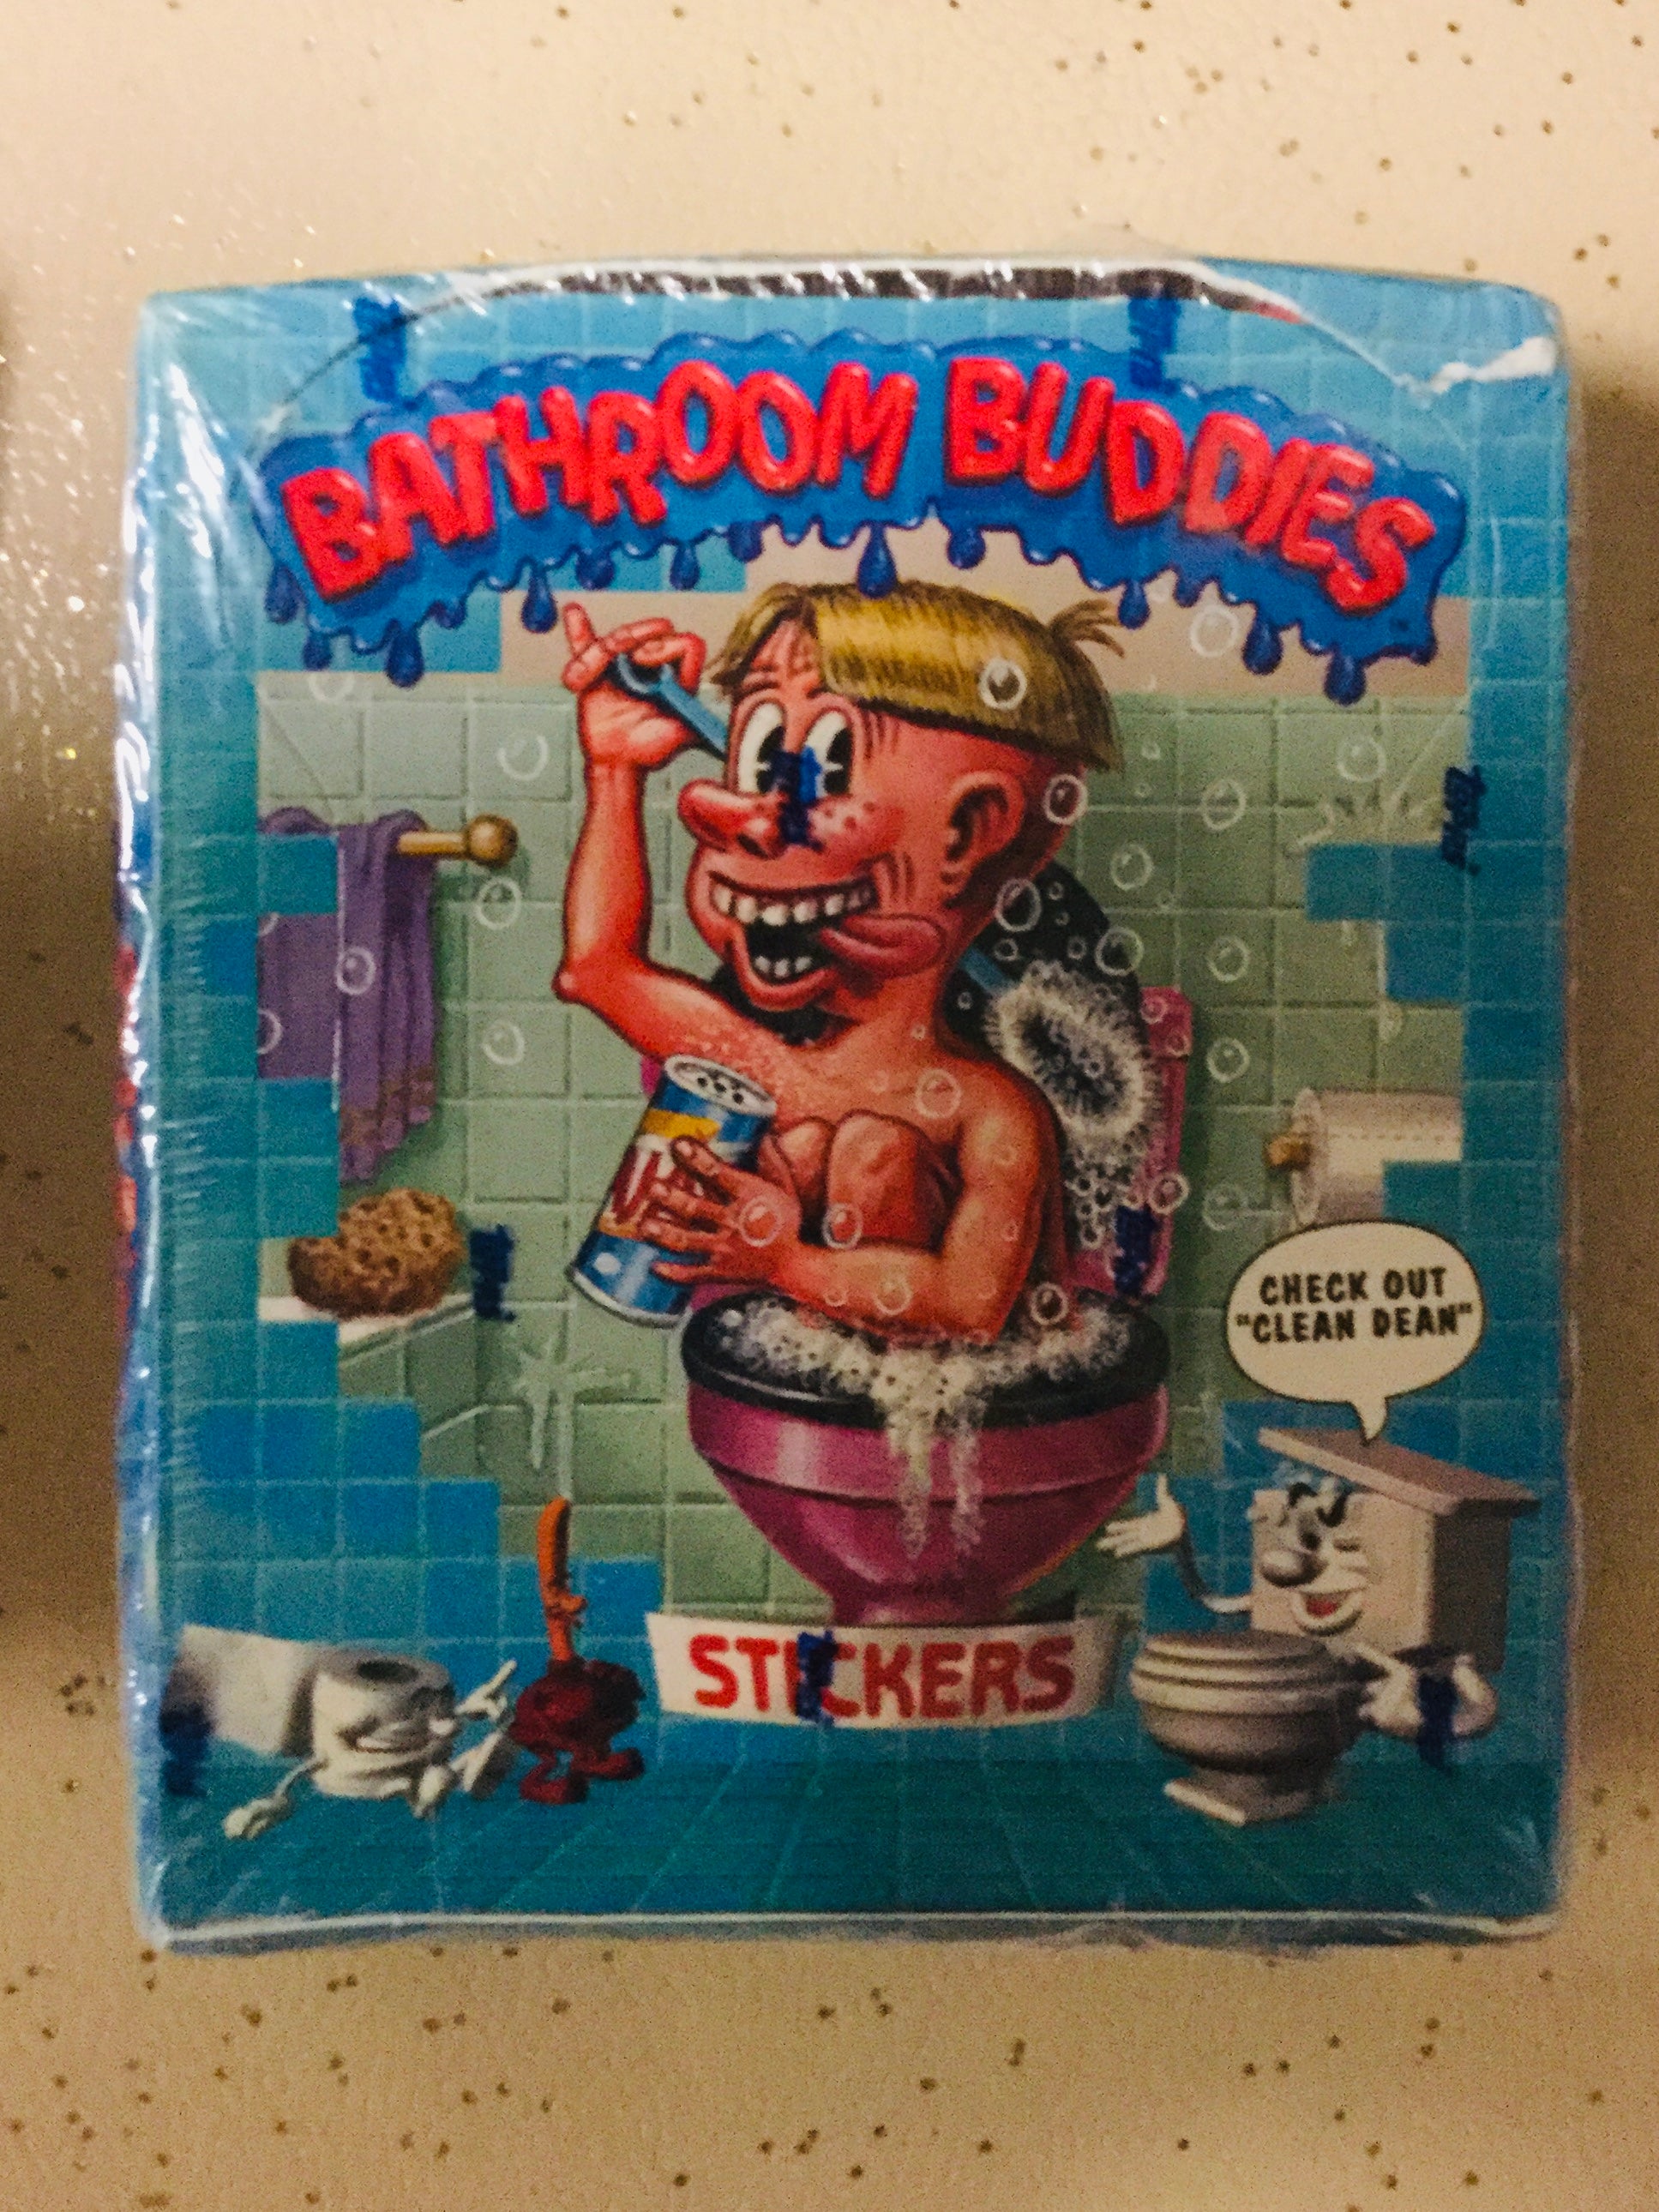 1996 Topps Bathroom Buddies cards 48 packs rare box